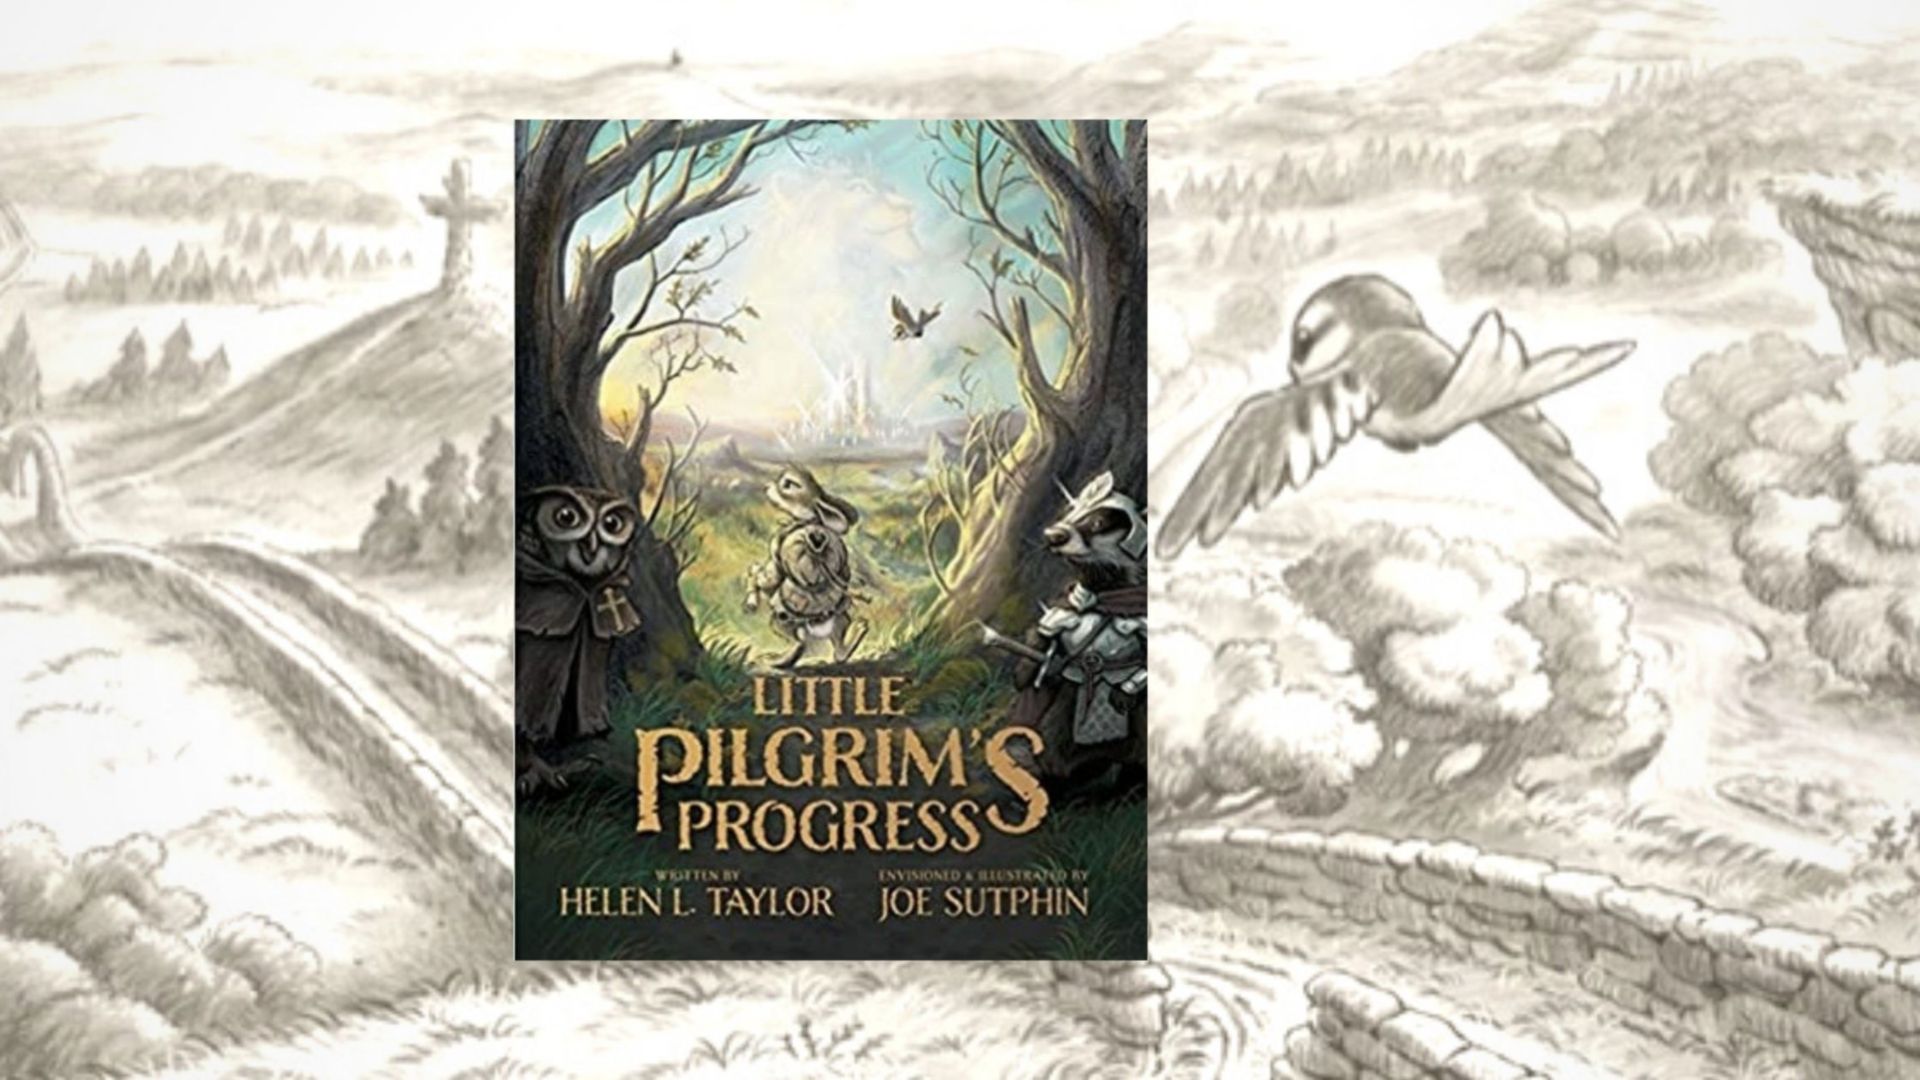 'Little Pilgrim's Progress' - a timeless classic reimagined by author Helen L Taylor